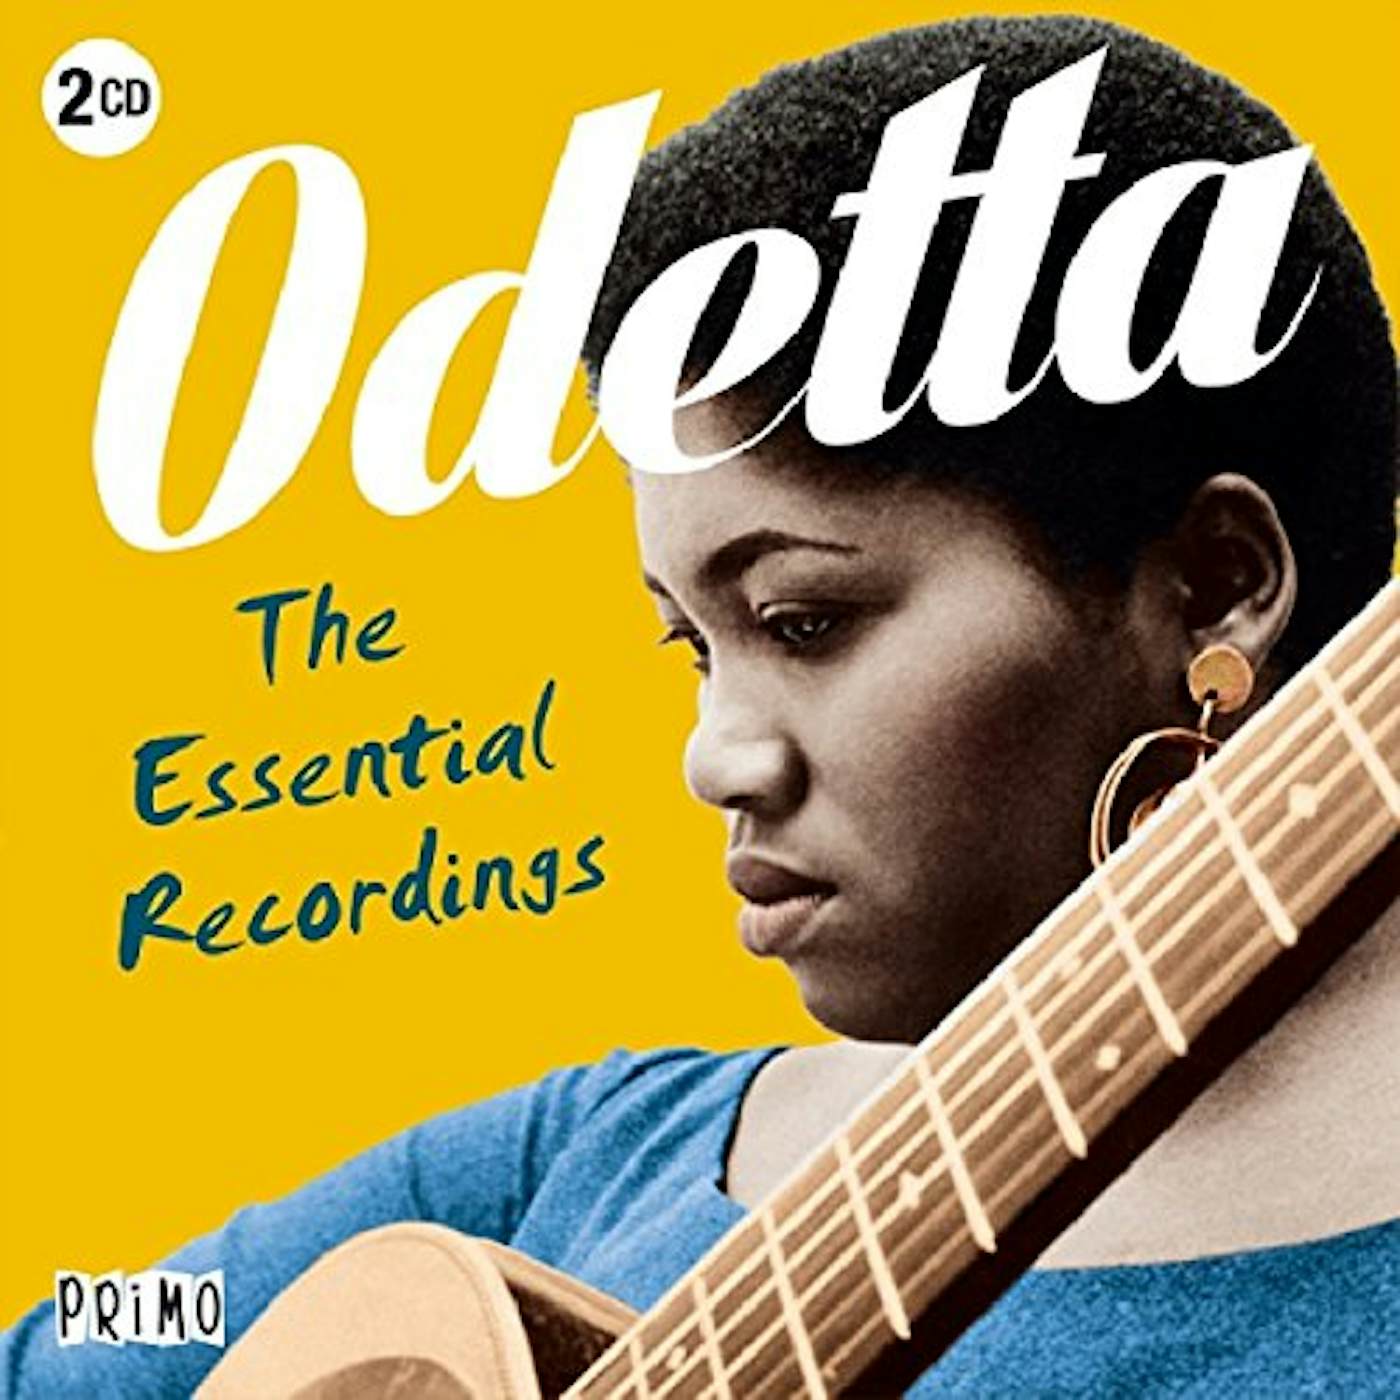 Odetta ESSENTIAL RECORDINGS CD